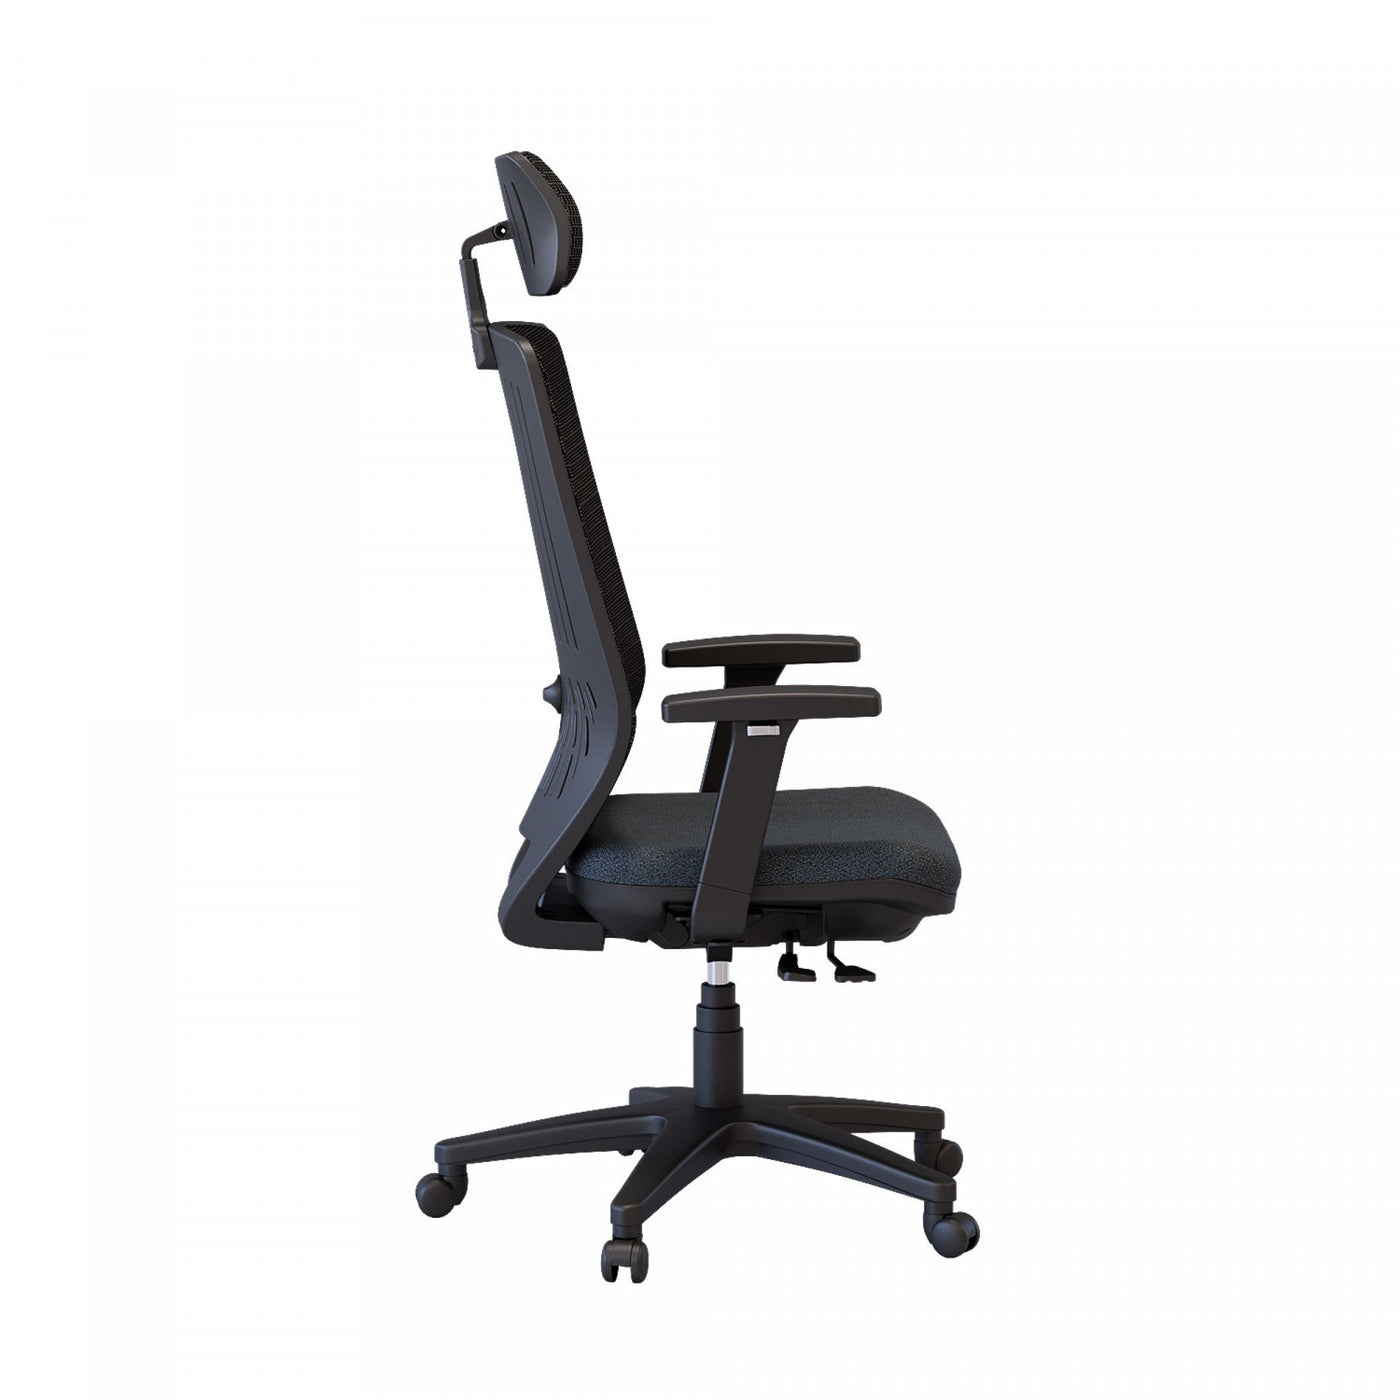 Noah Office Chair - Graphite